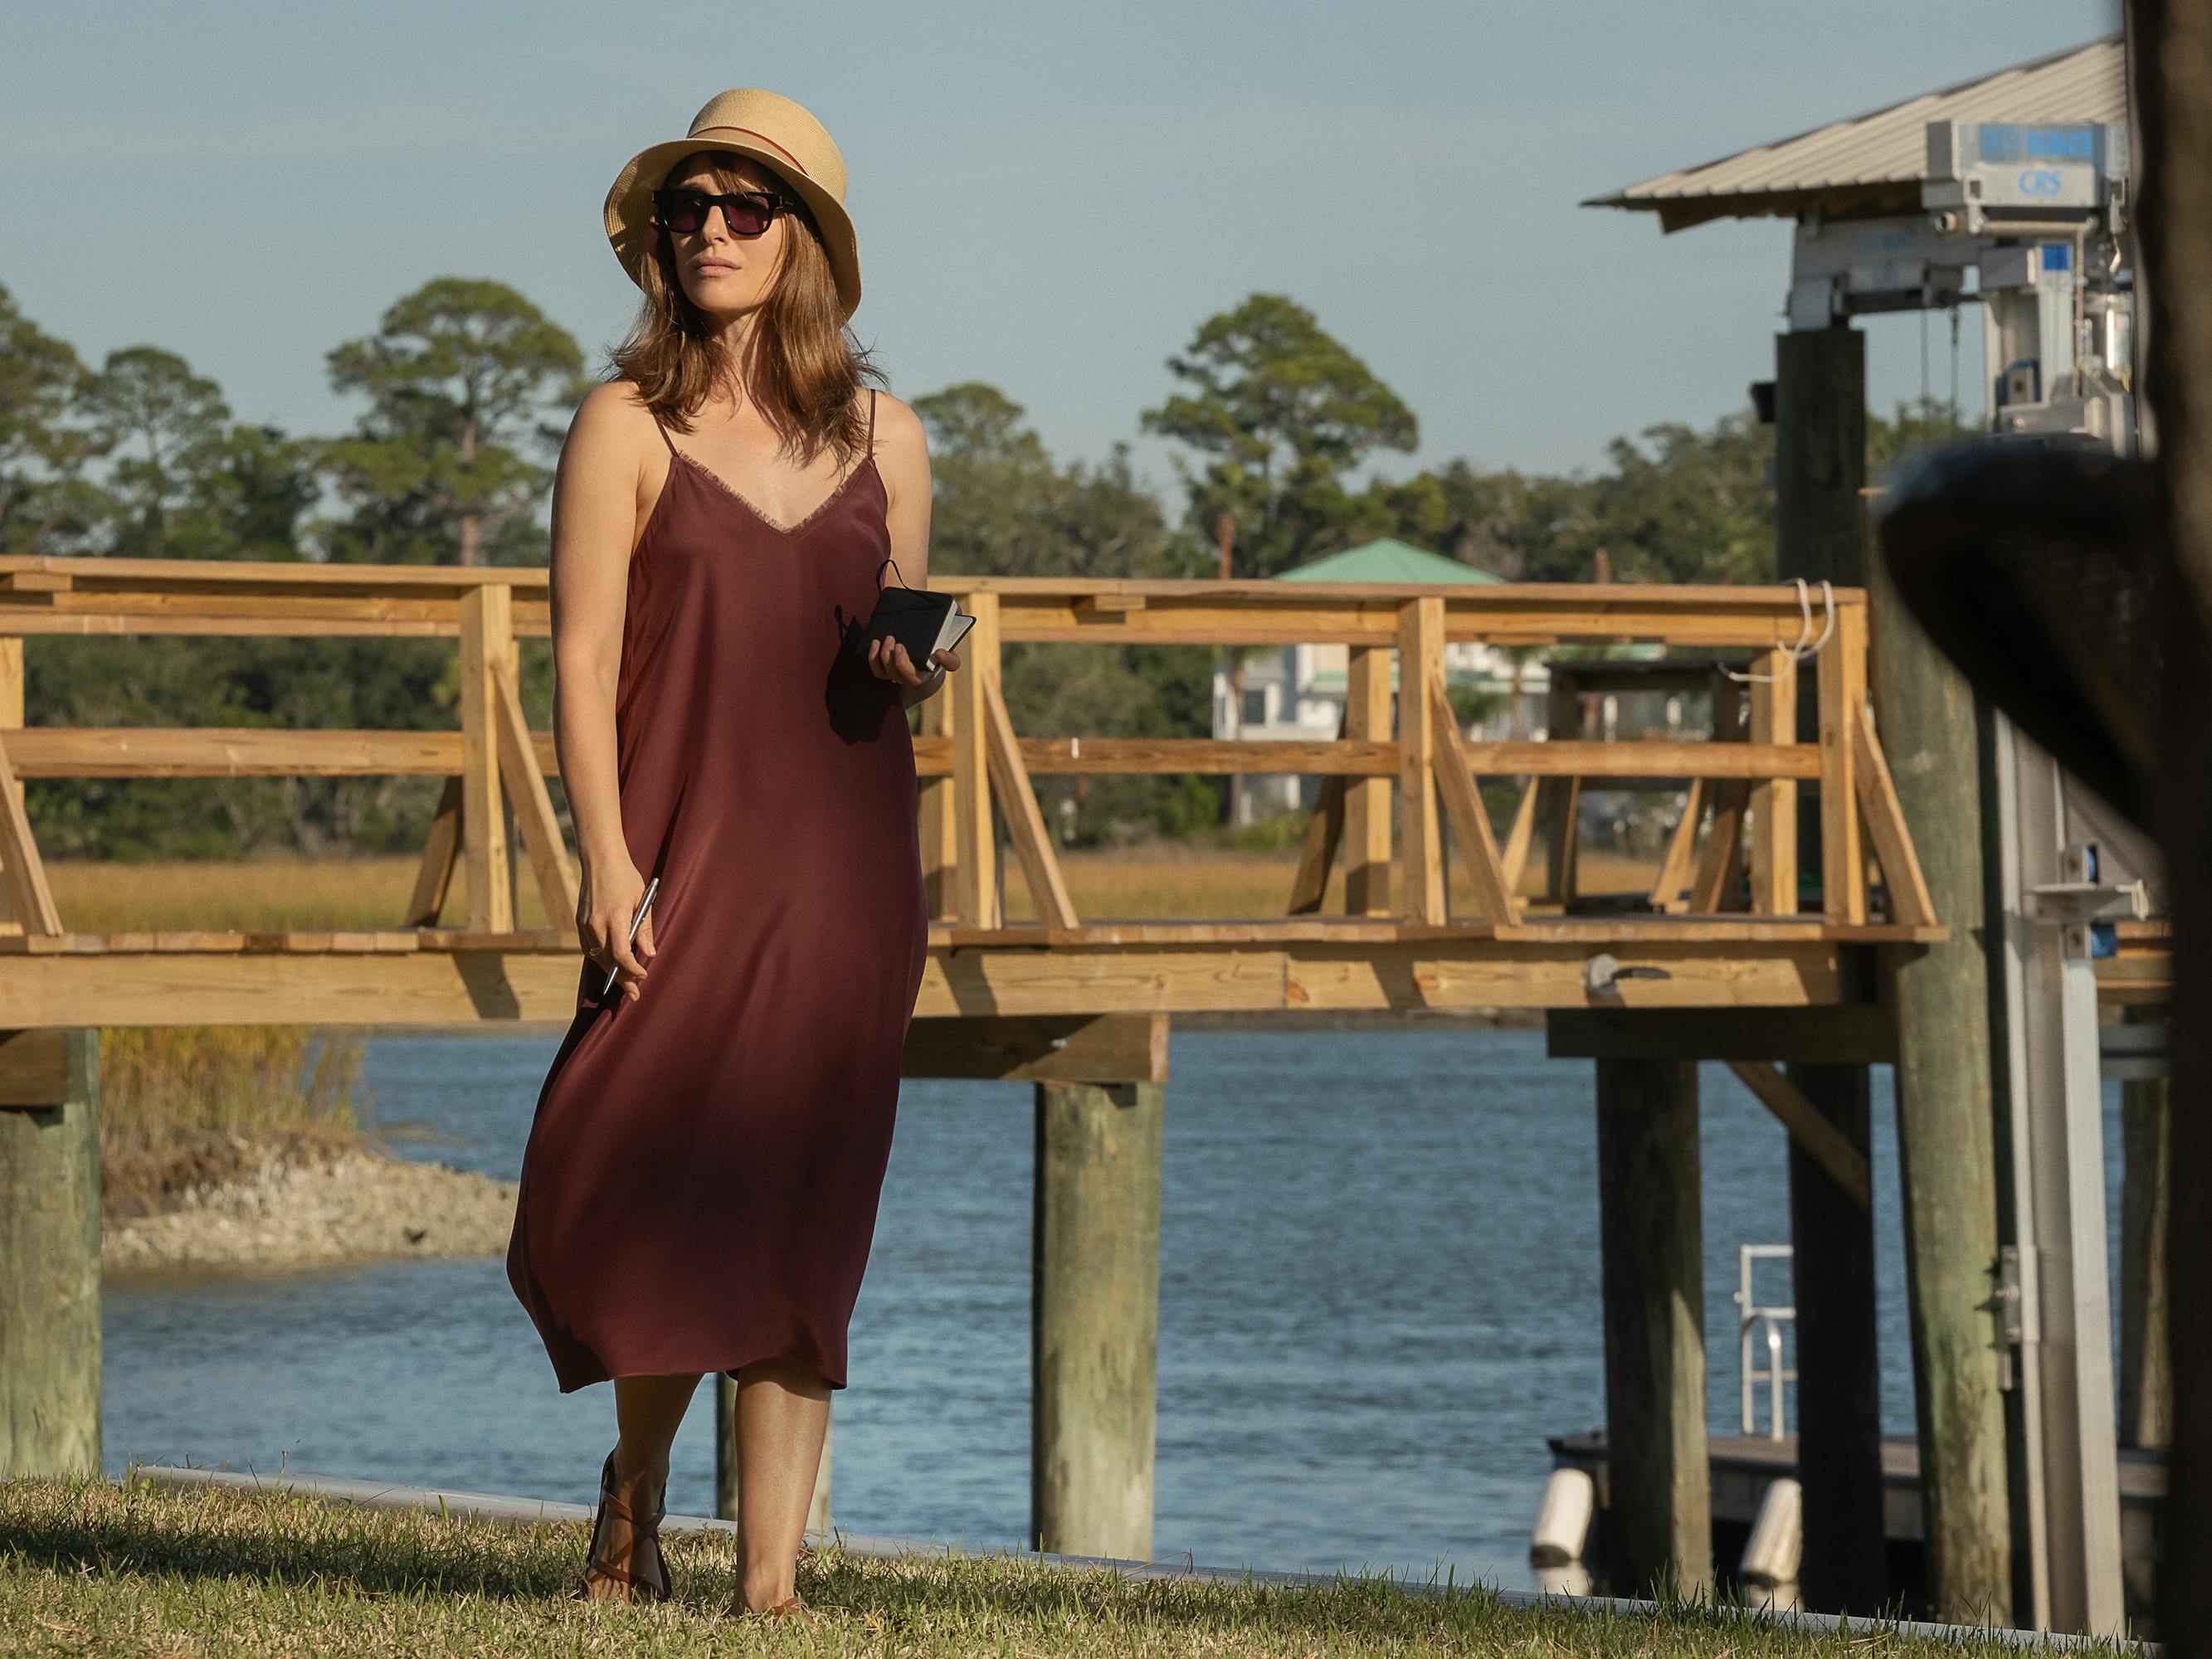 Natalie Portman wears a maroon dress and walks on a dock.